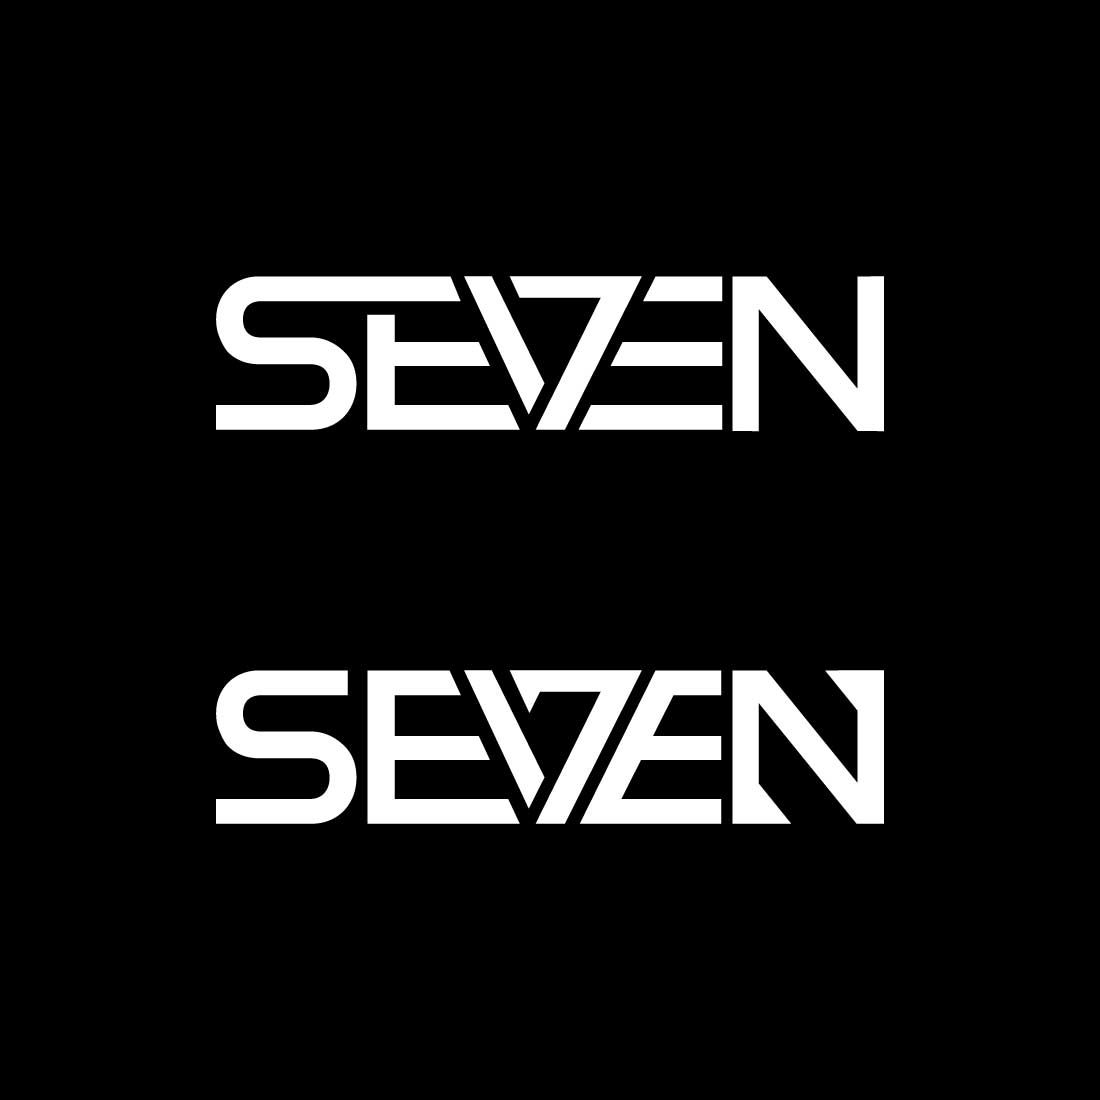 Seven modern stylish typography branding creative logo preview image.